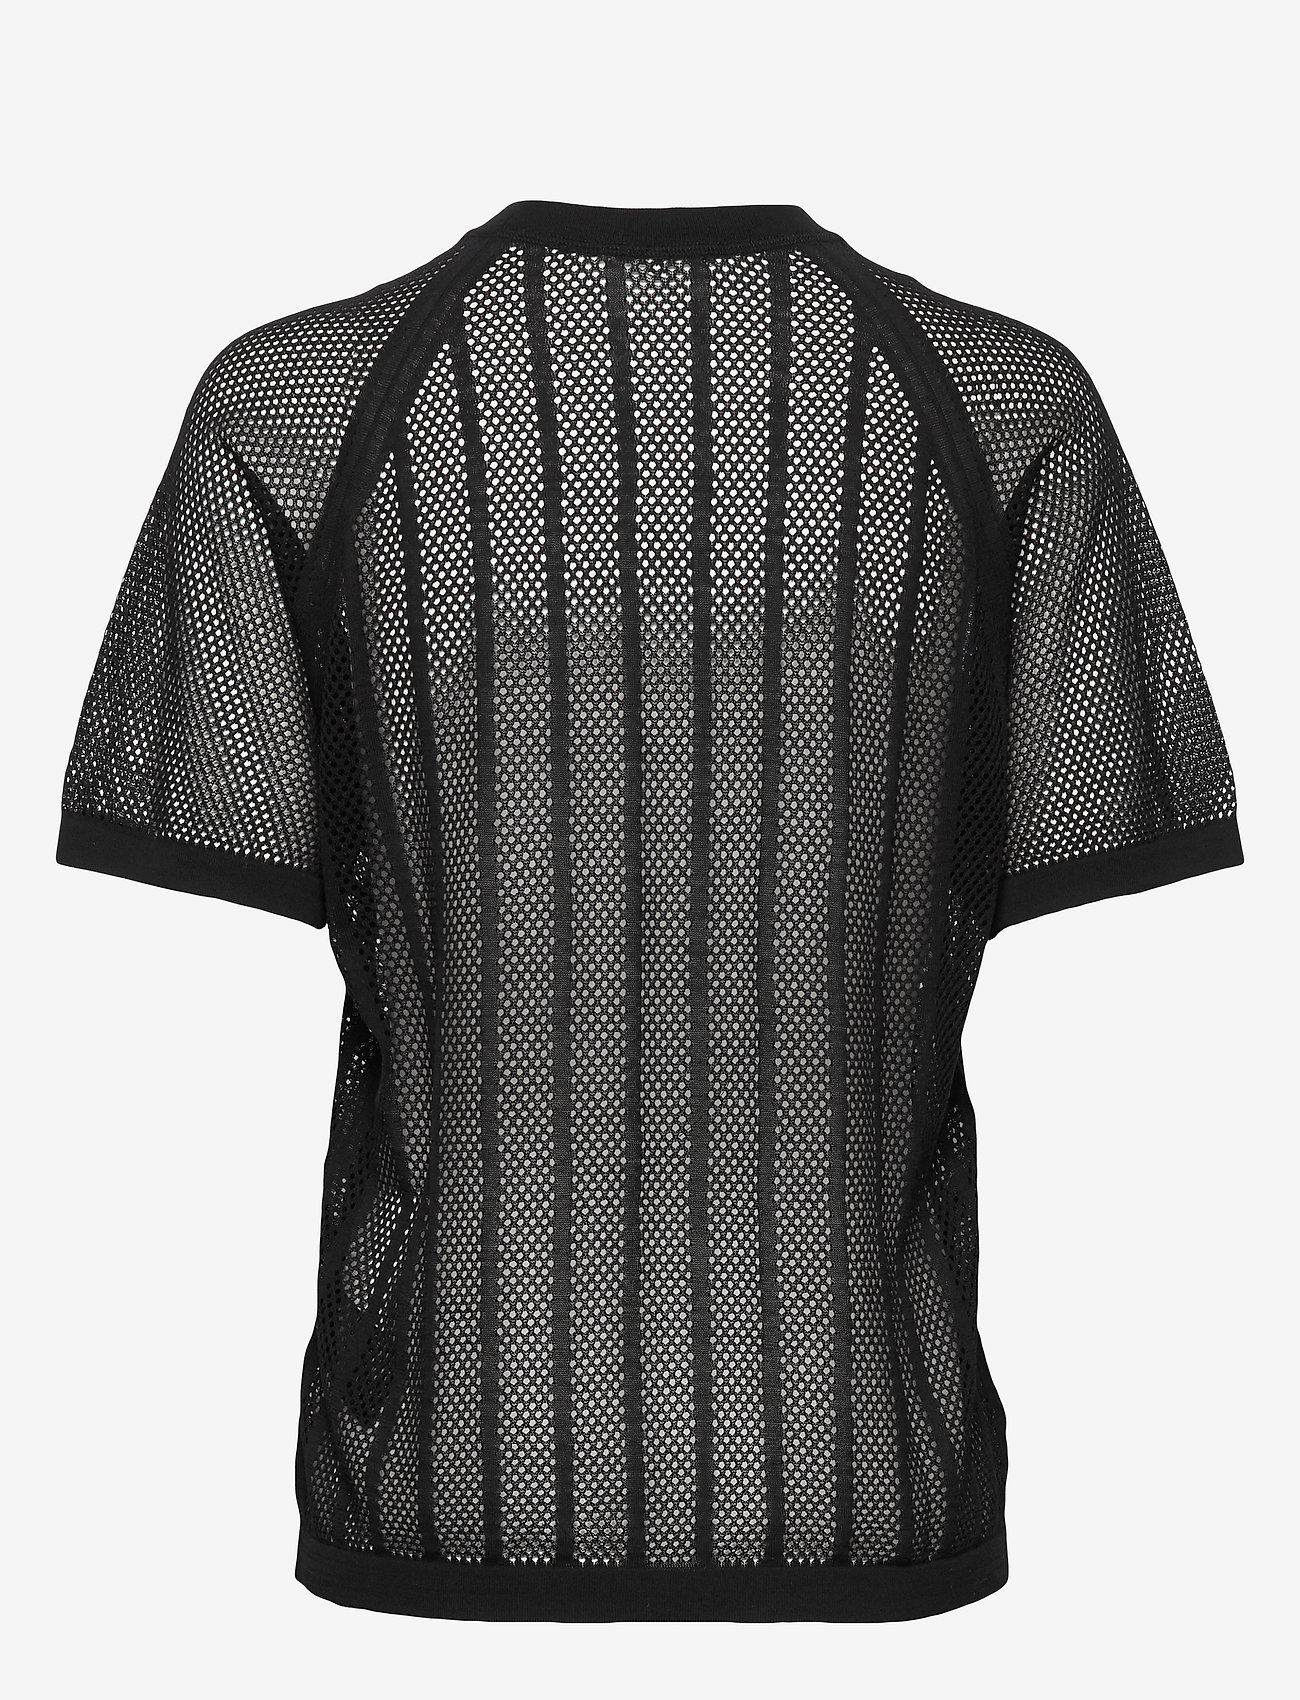 Filippa K - Cotton Mesh Knit Top - t-shirts - black - 1